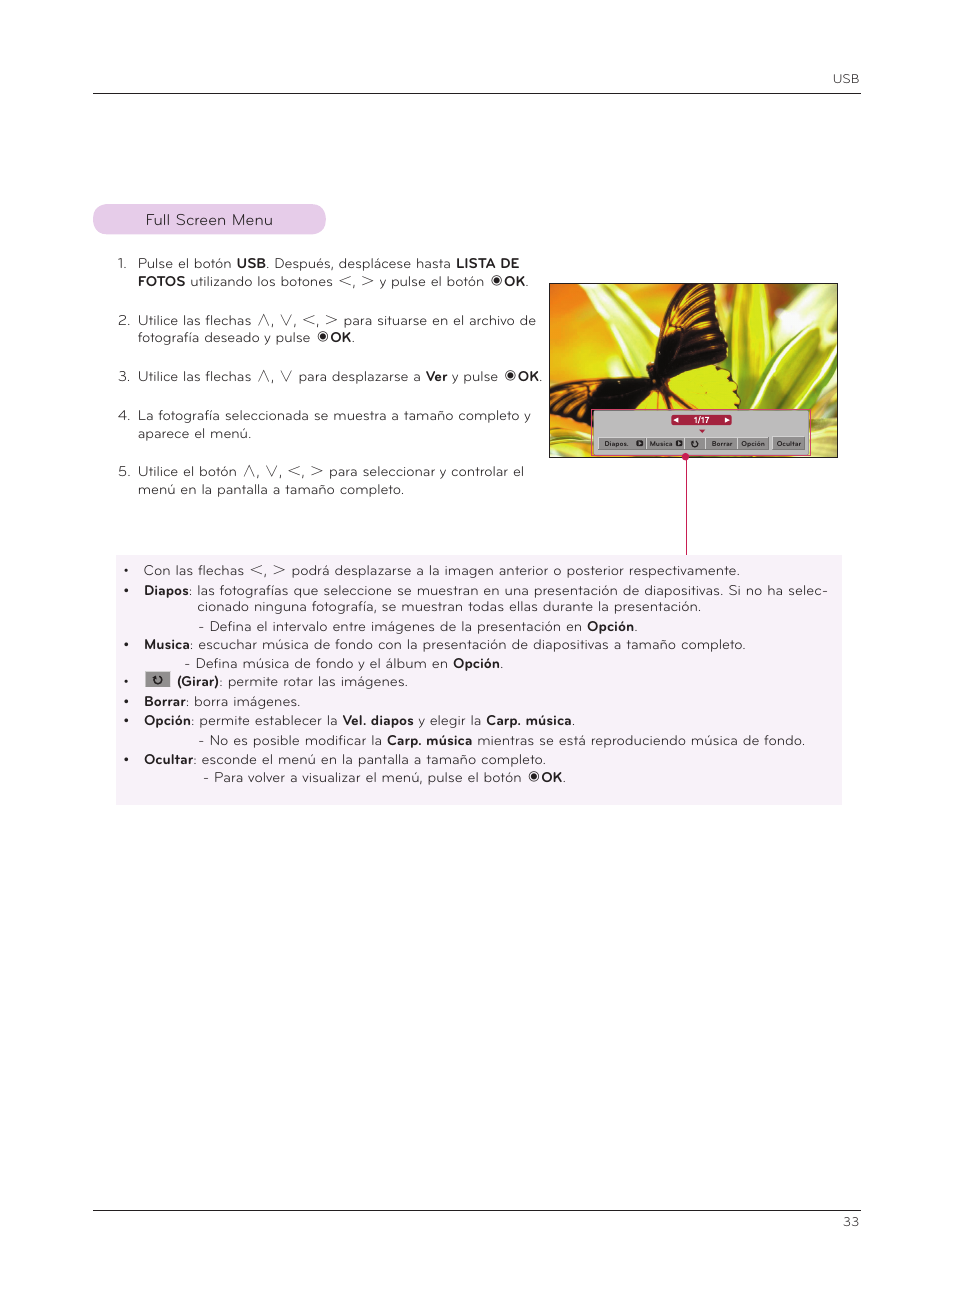 Full screen menu | LG HX300G Manual del usuario | Página 33 / 44